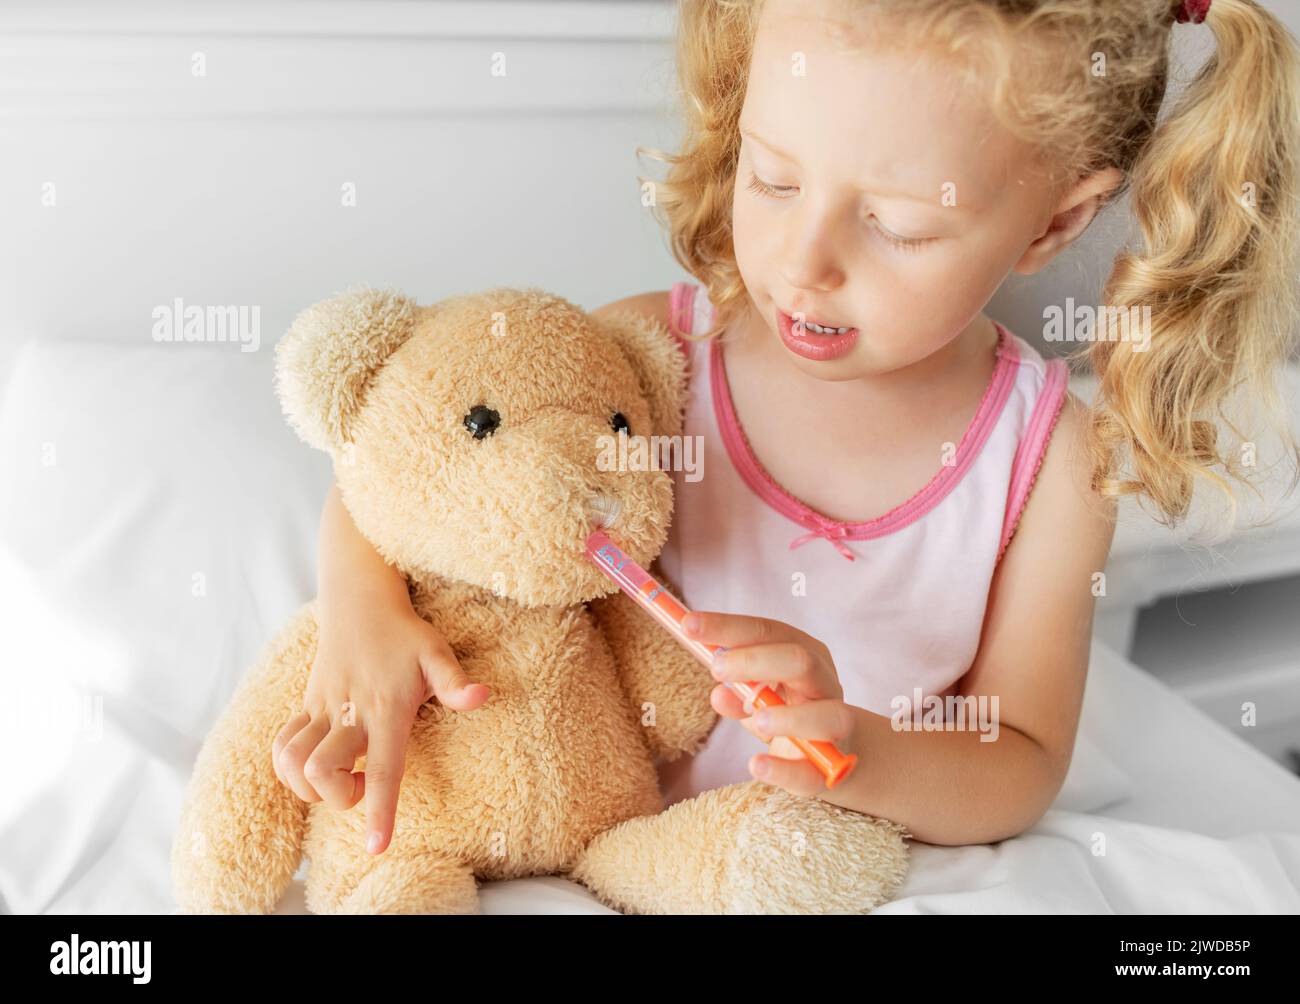 The child treats the bear. Play during illness. Stock Photo